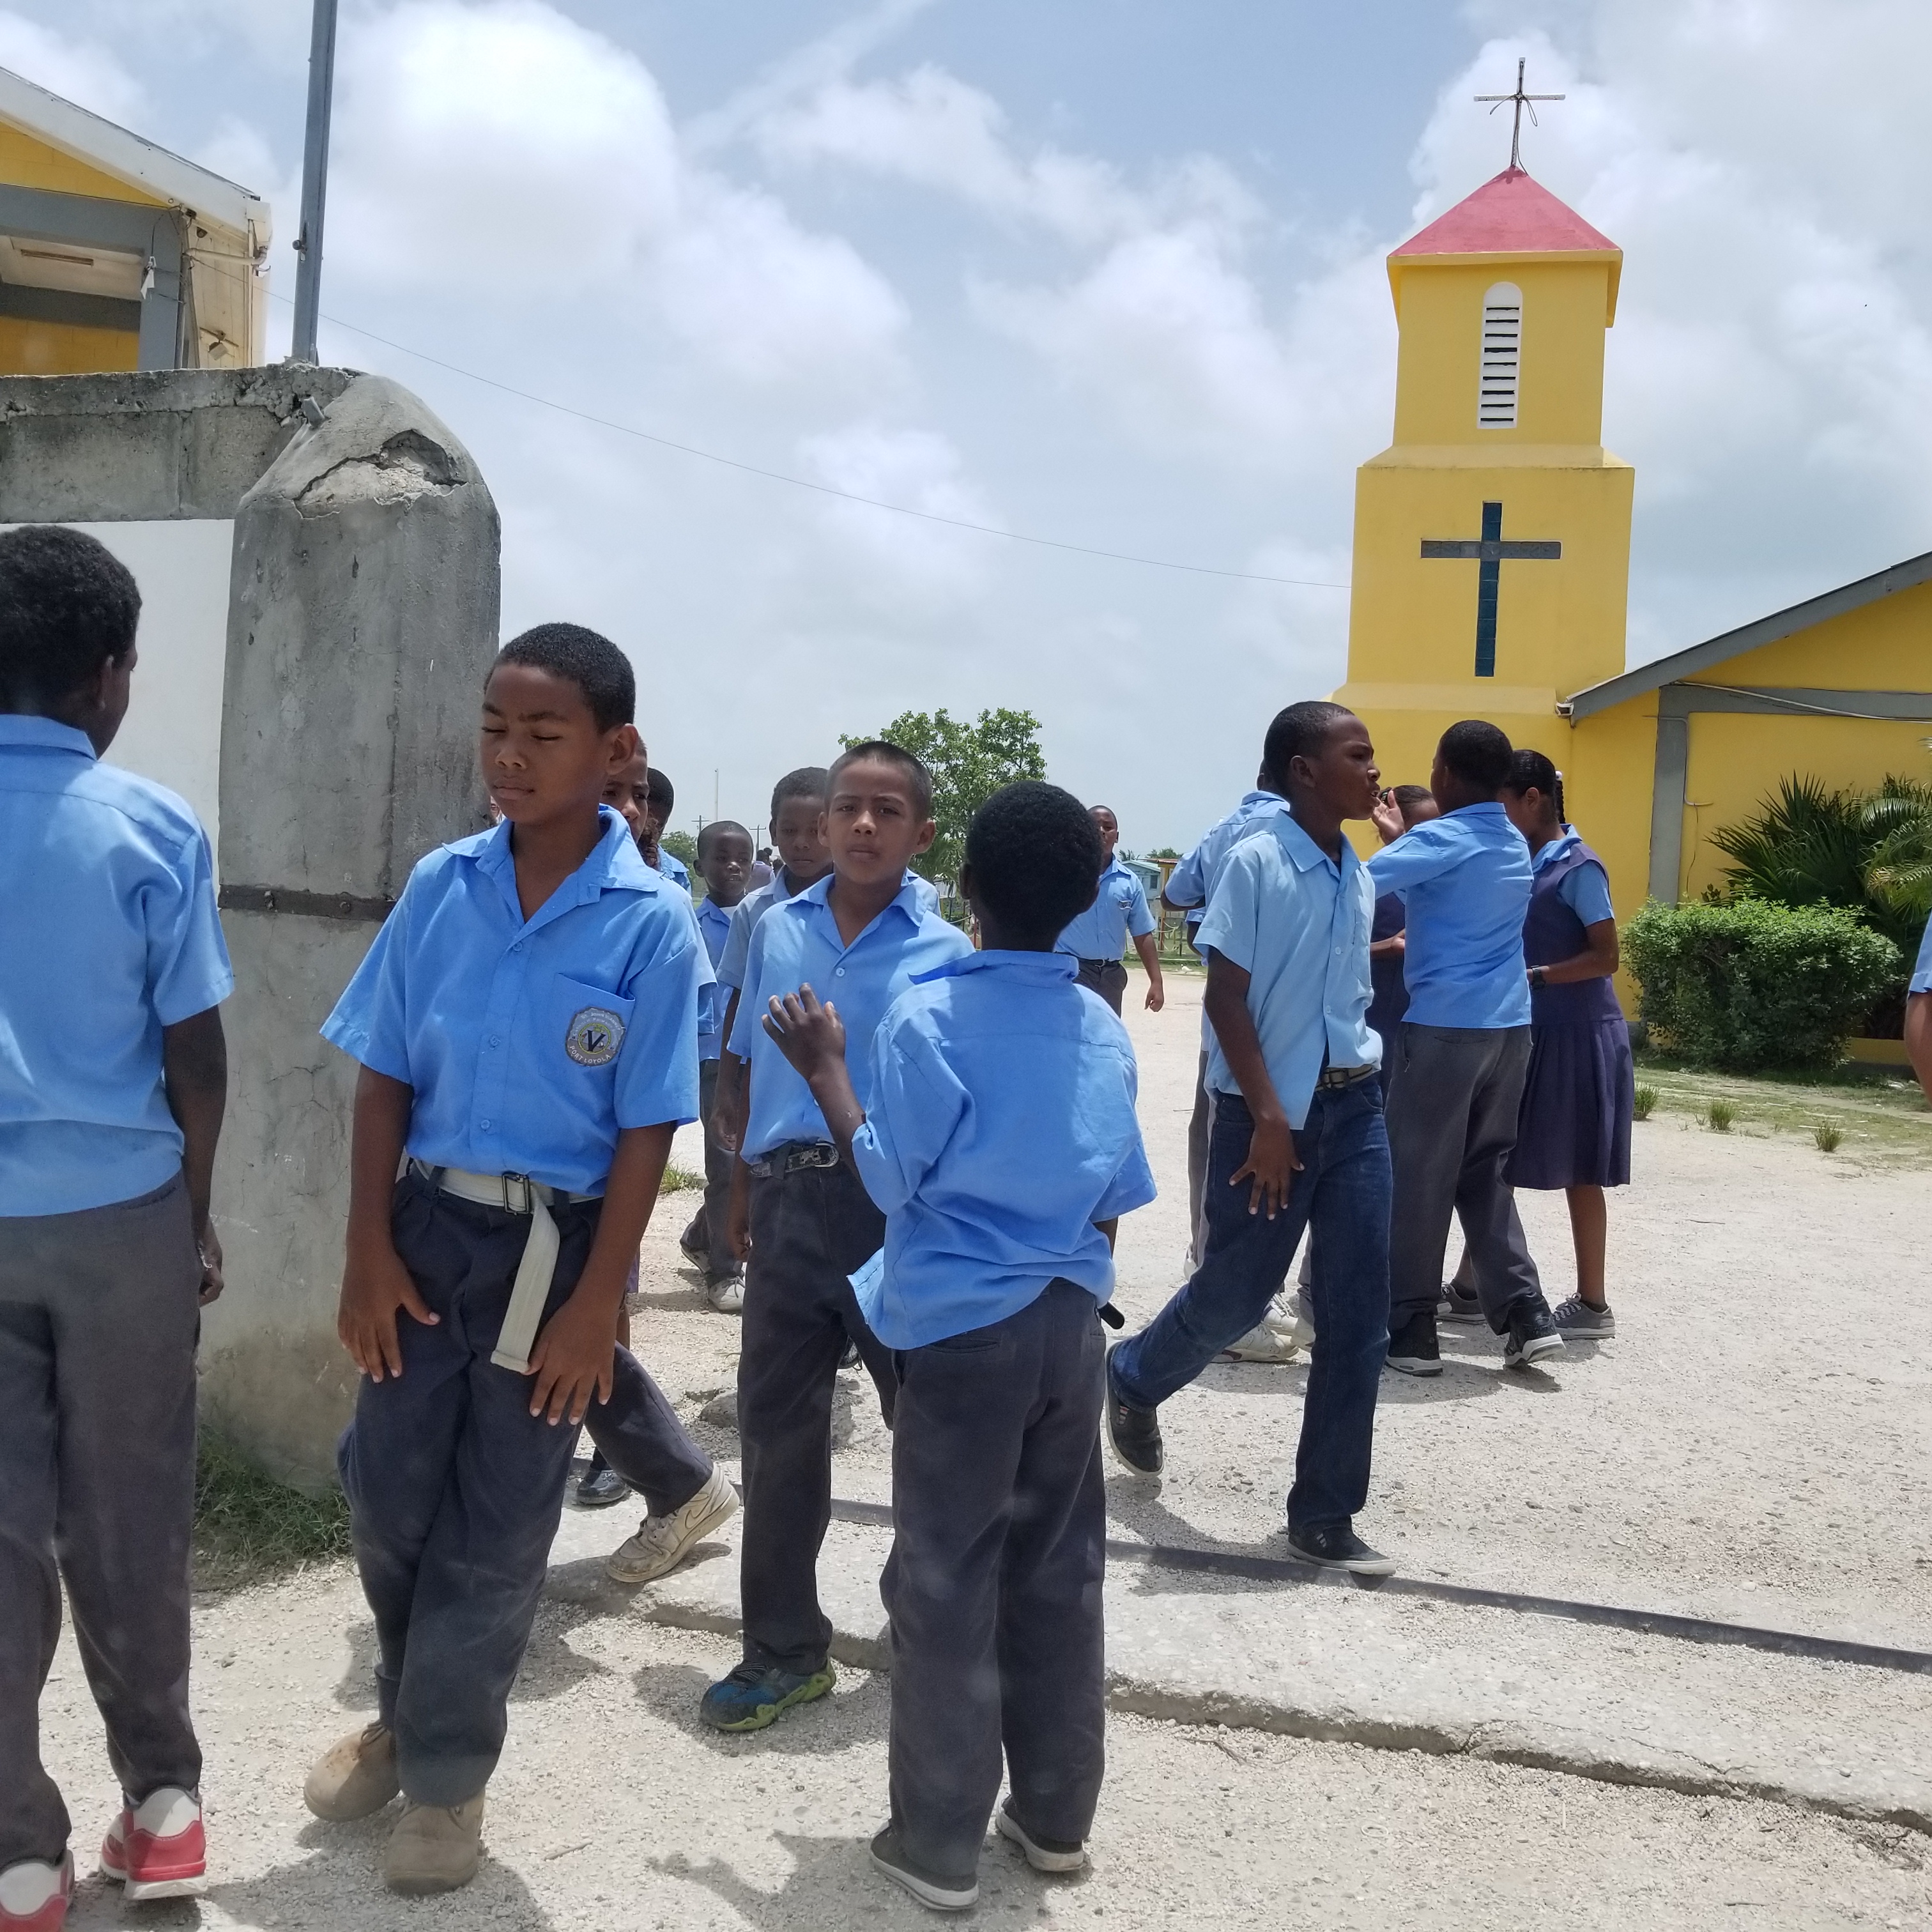 Children in Belize